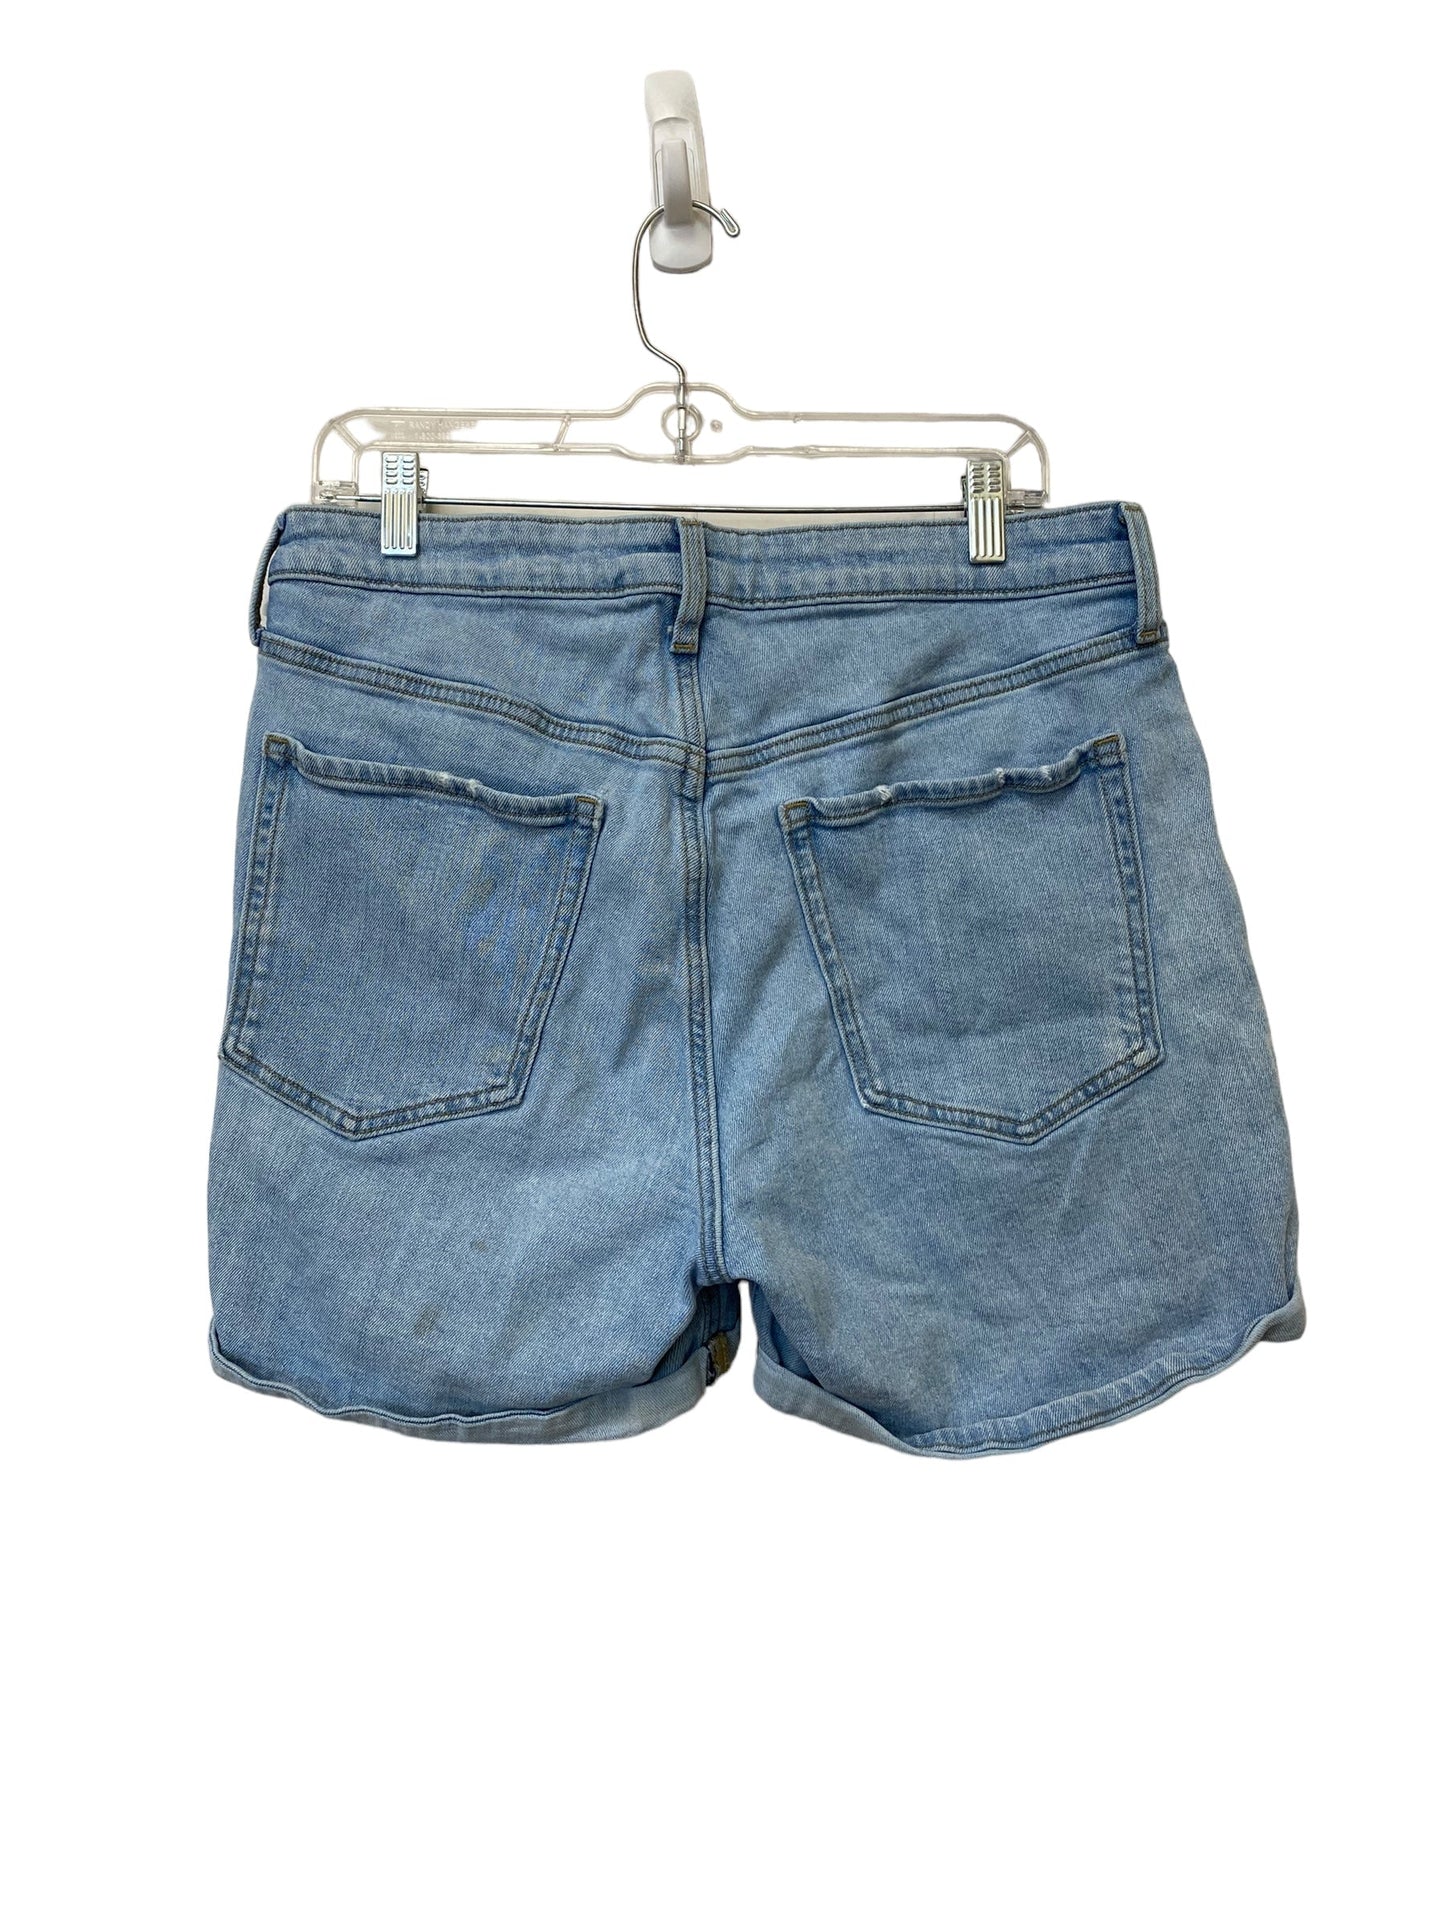 Blue Denim Shorts Old Navy, Size 14